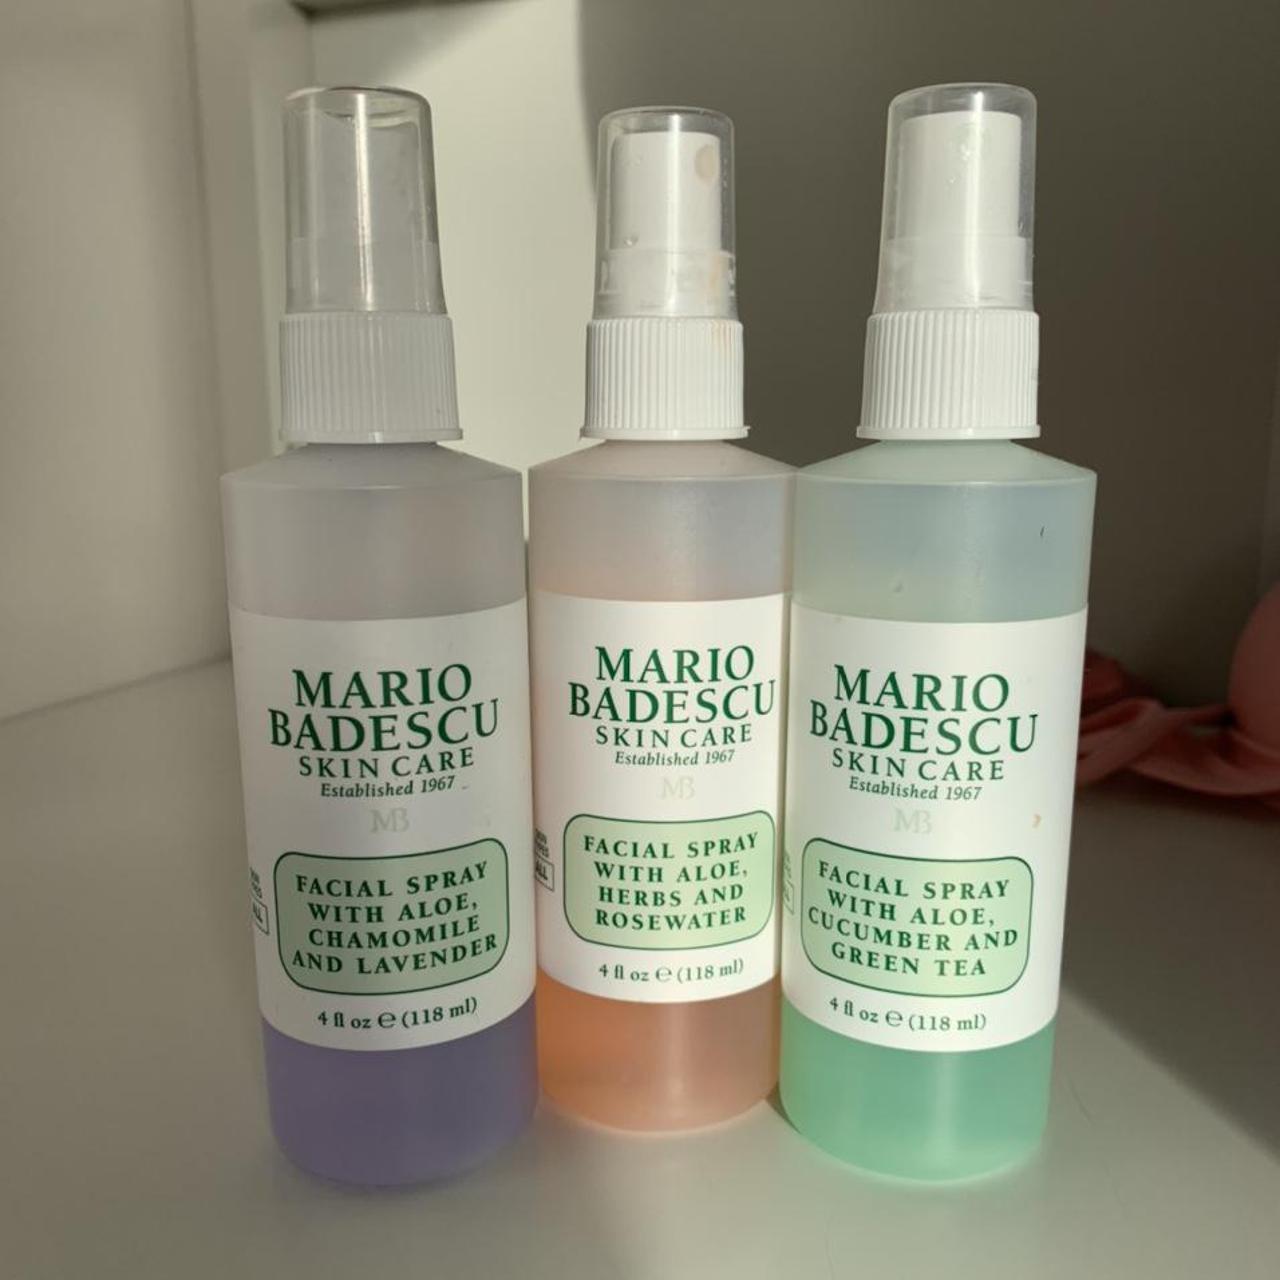 Product Image 1 - 3 mario badescu sprays
all hardly